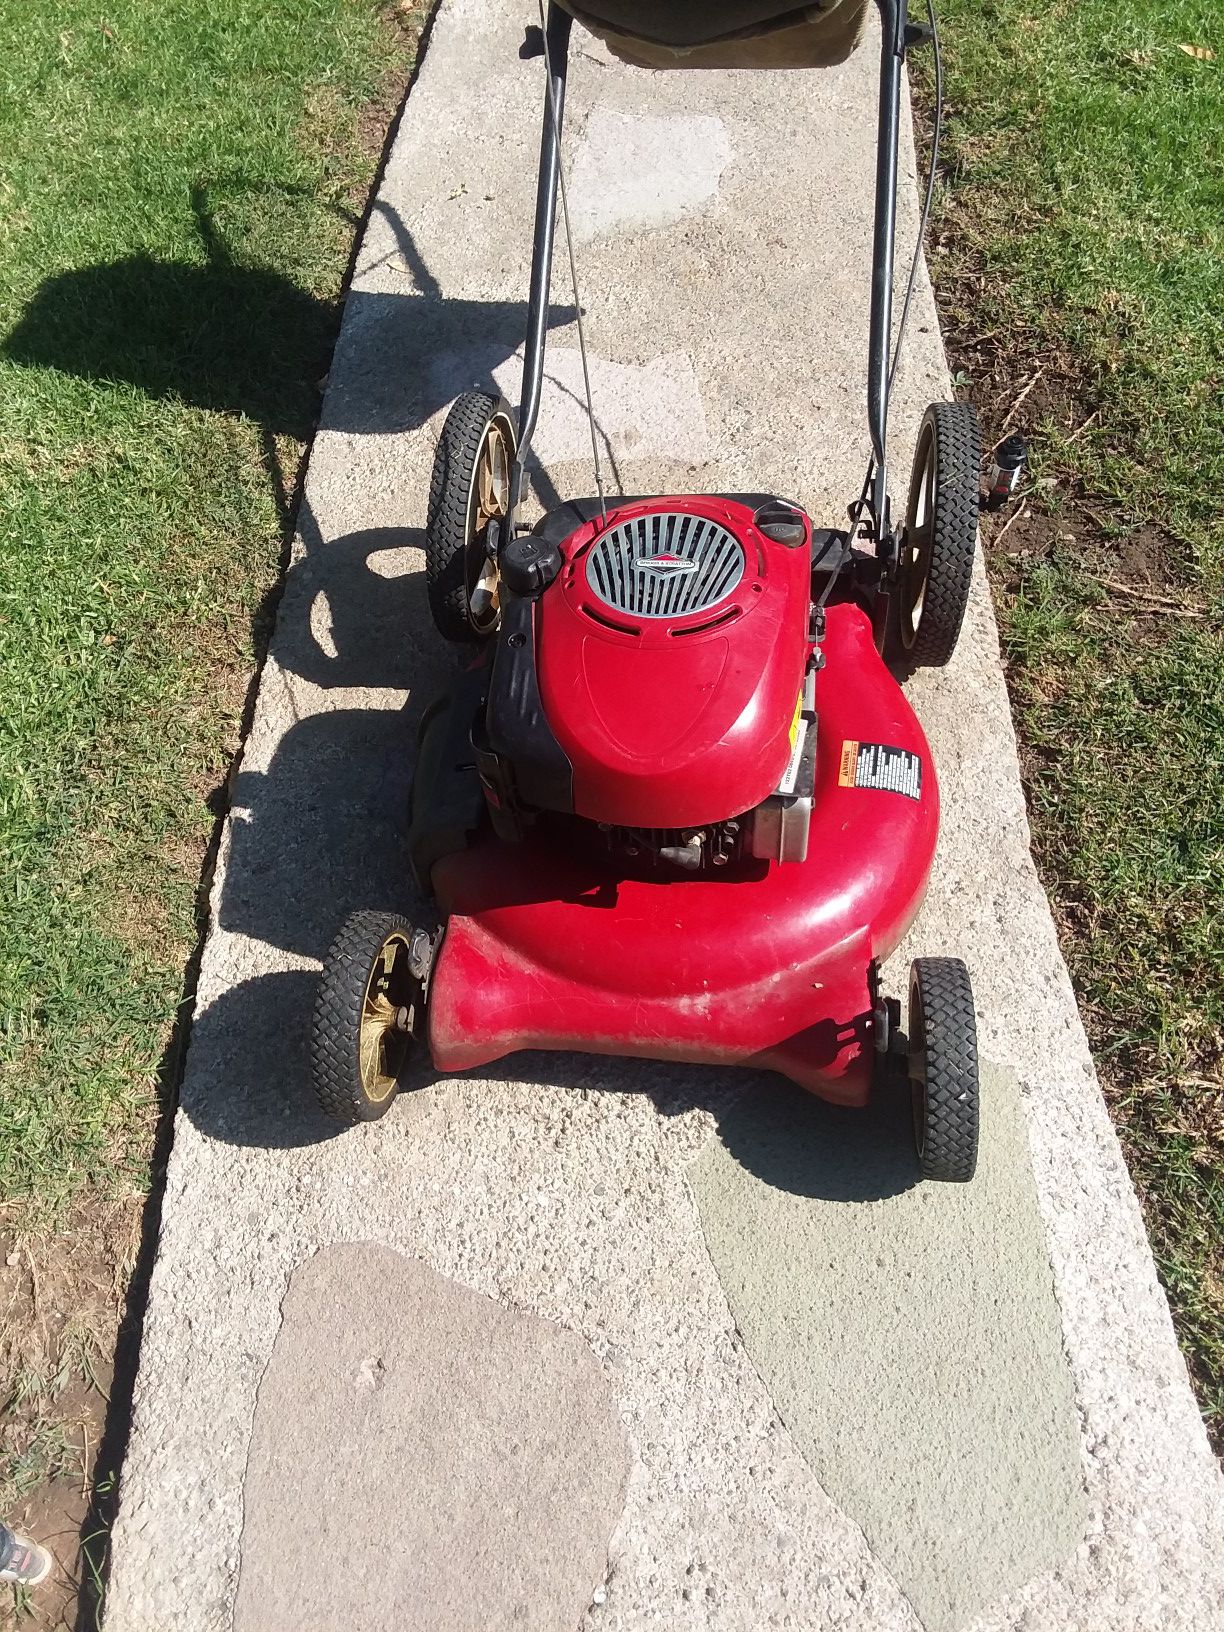 Craftman push lawn mower